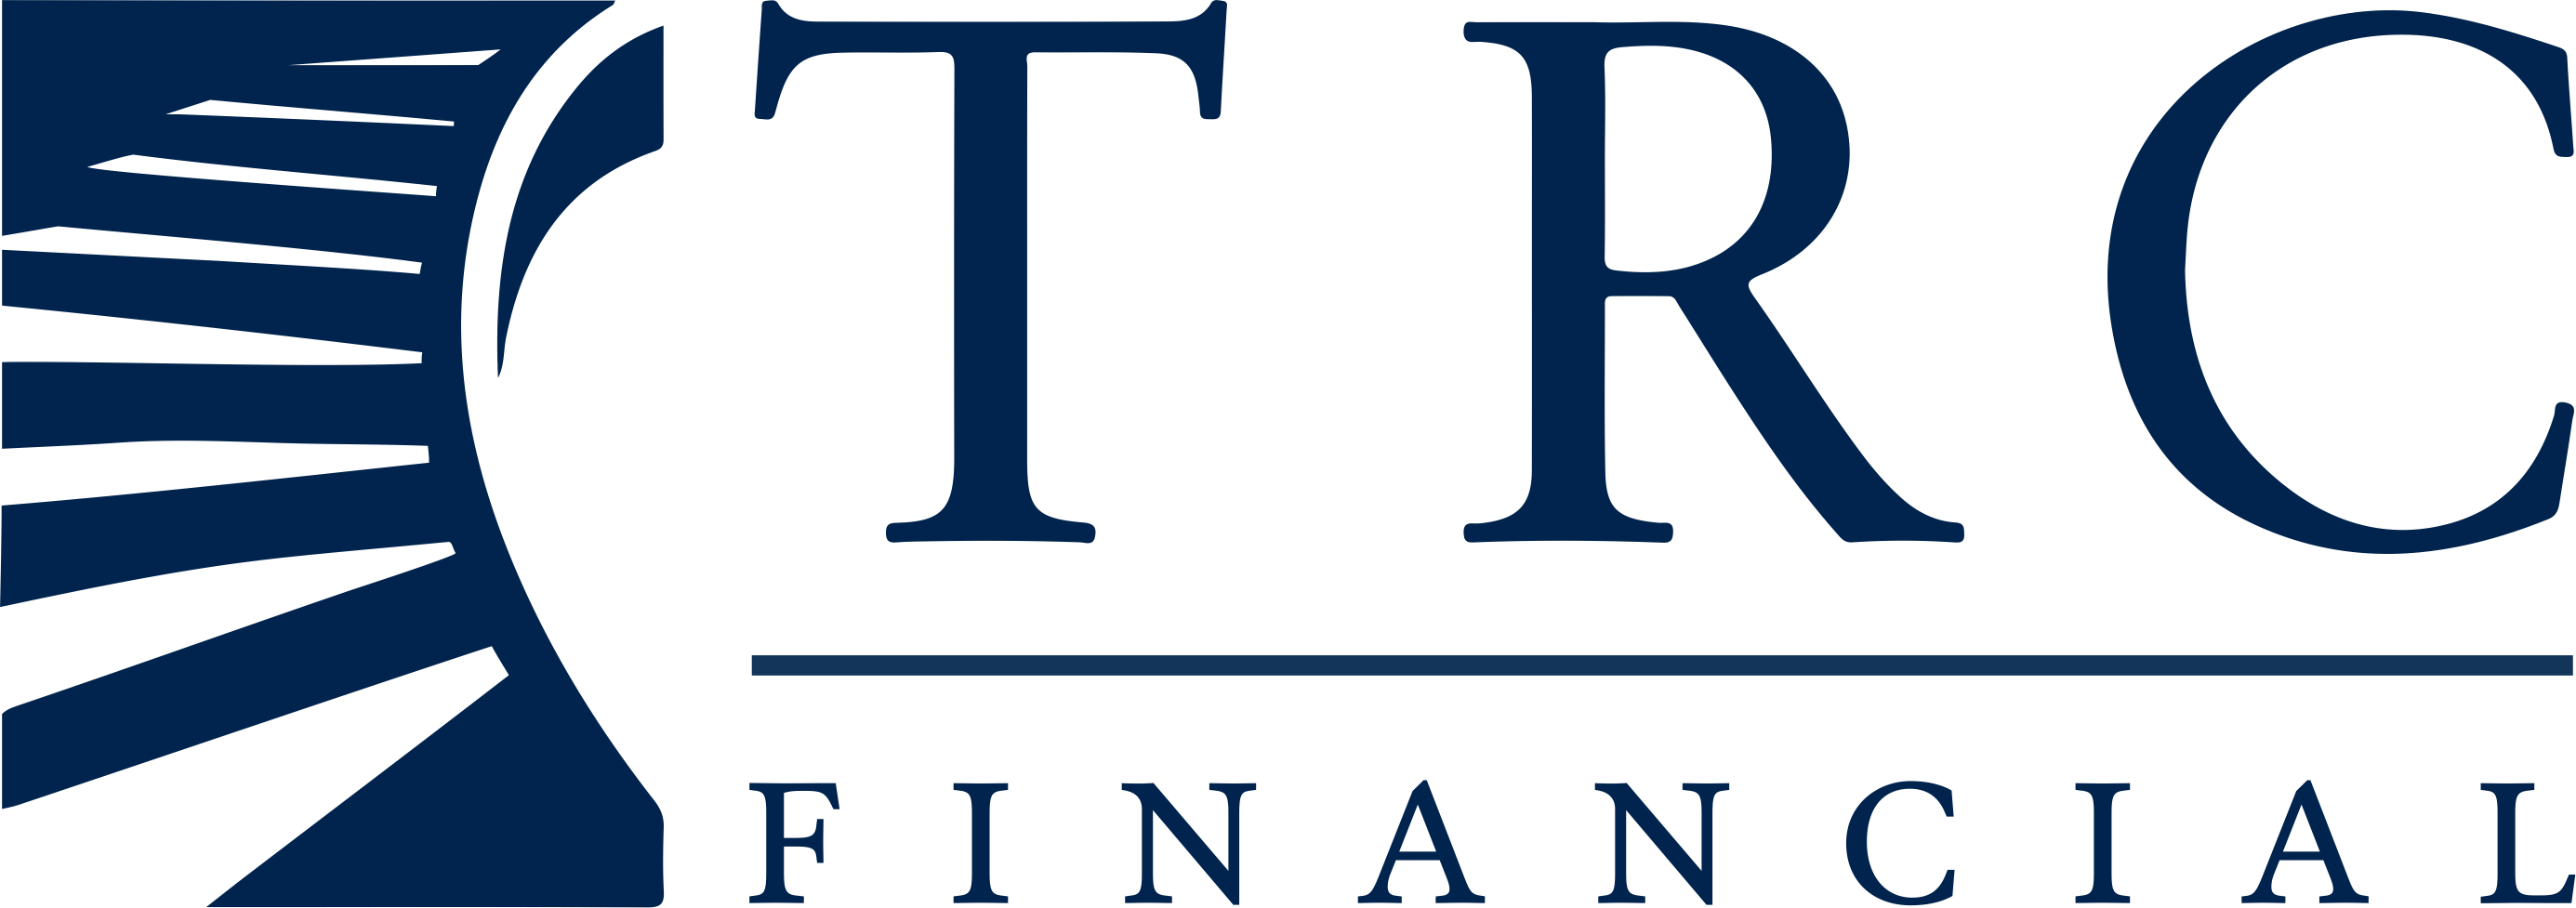 Blue Logo